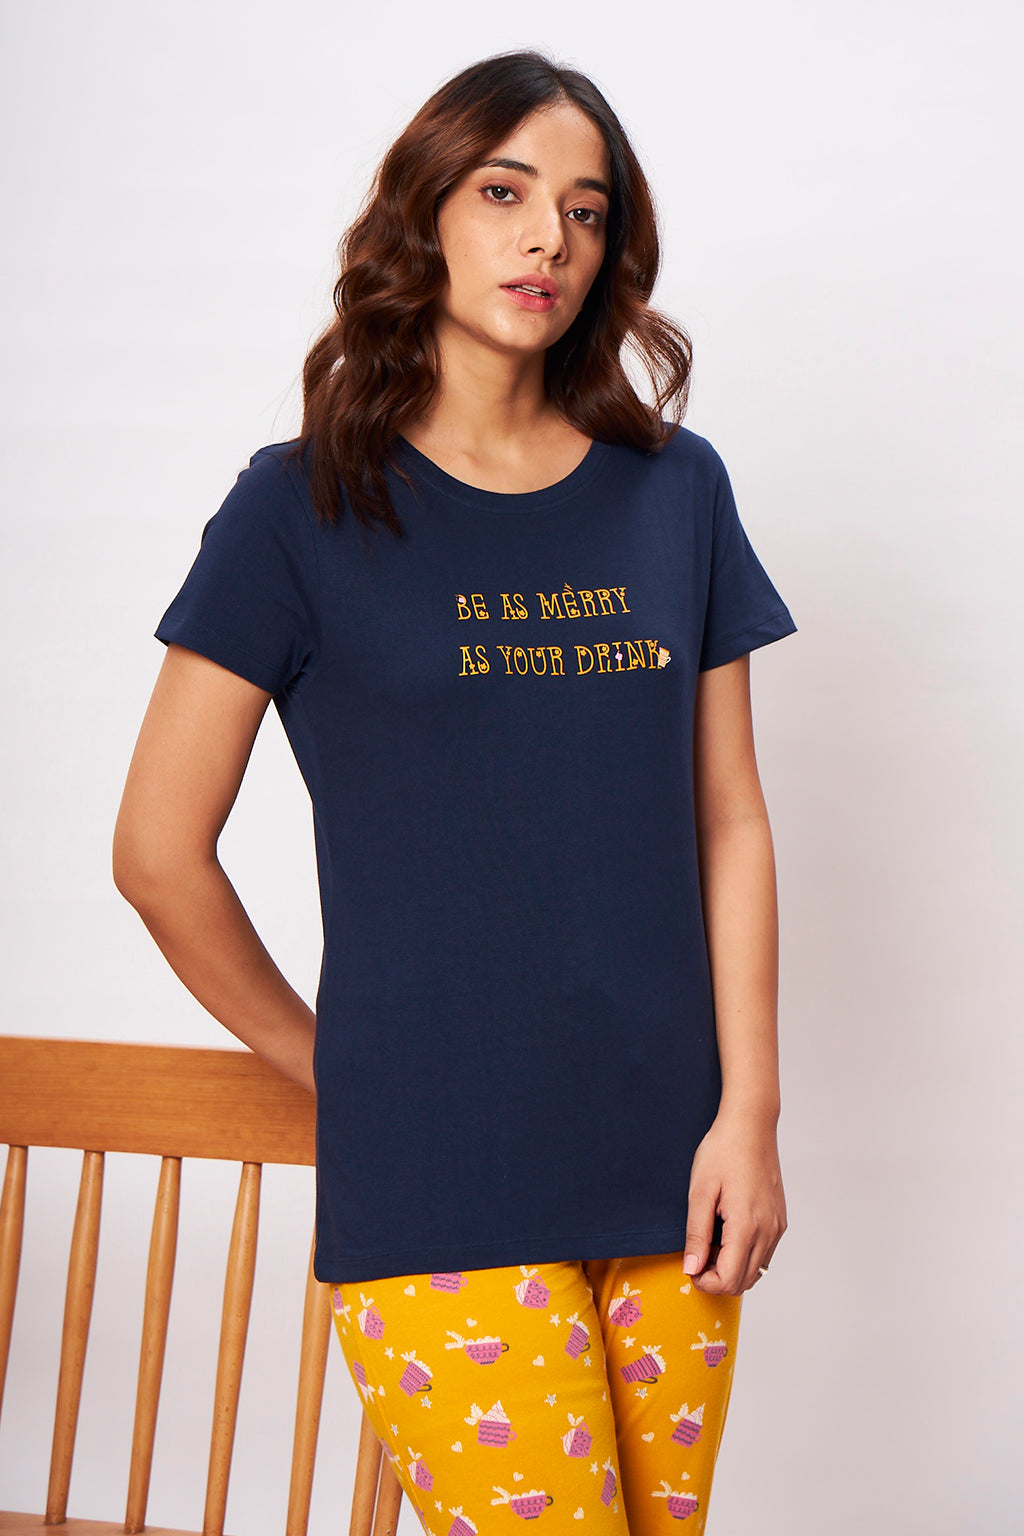 Caprice Knitted cotton Navy T-Shirt - Pyjama set